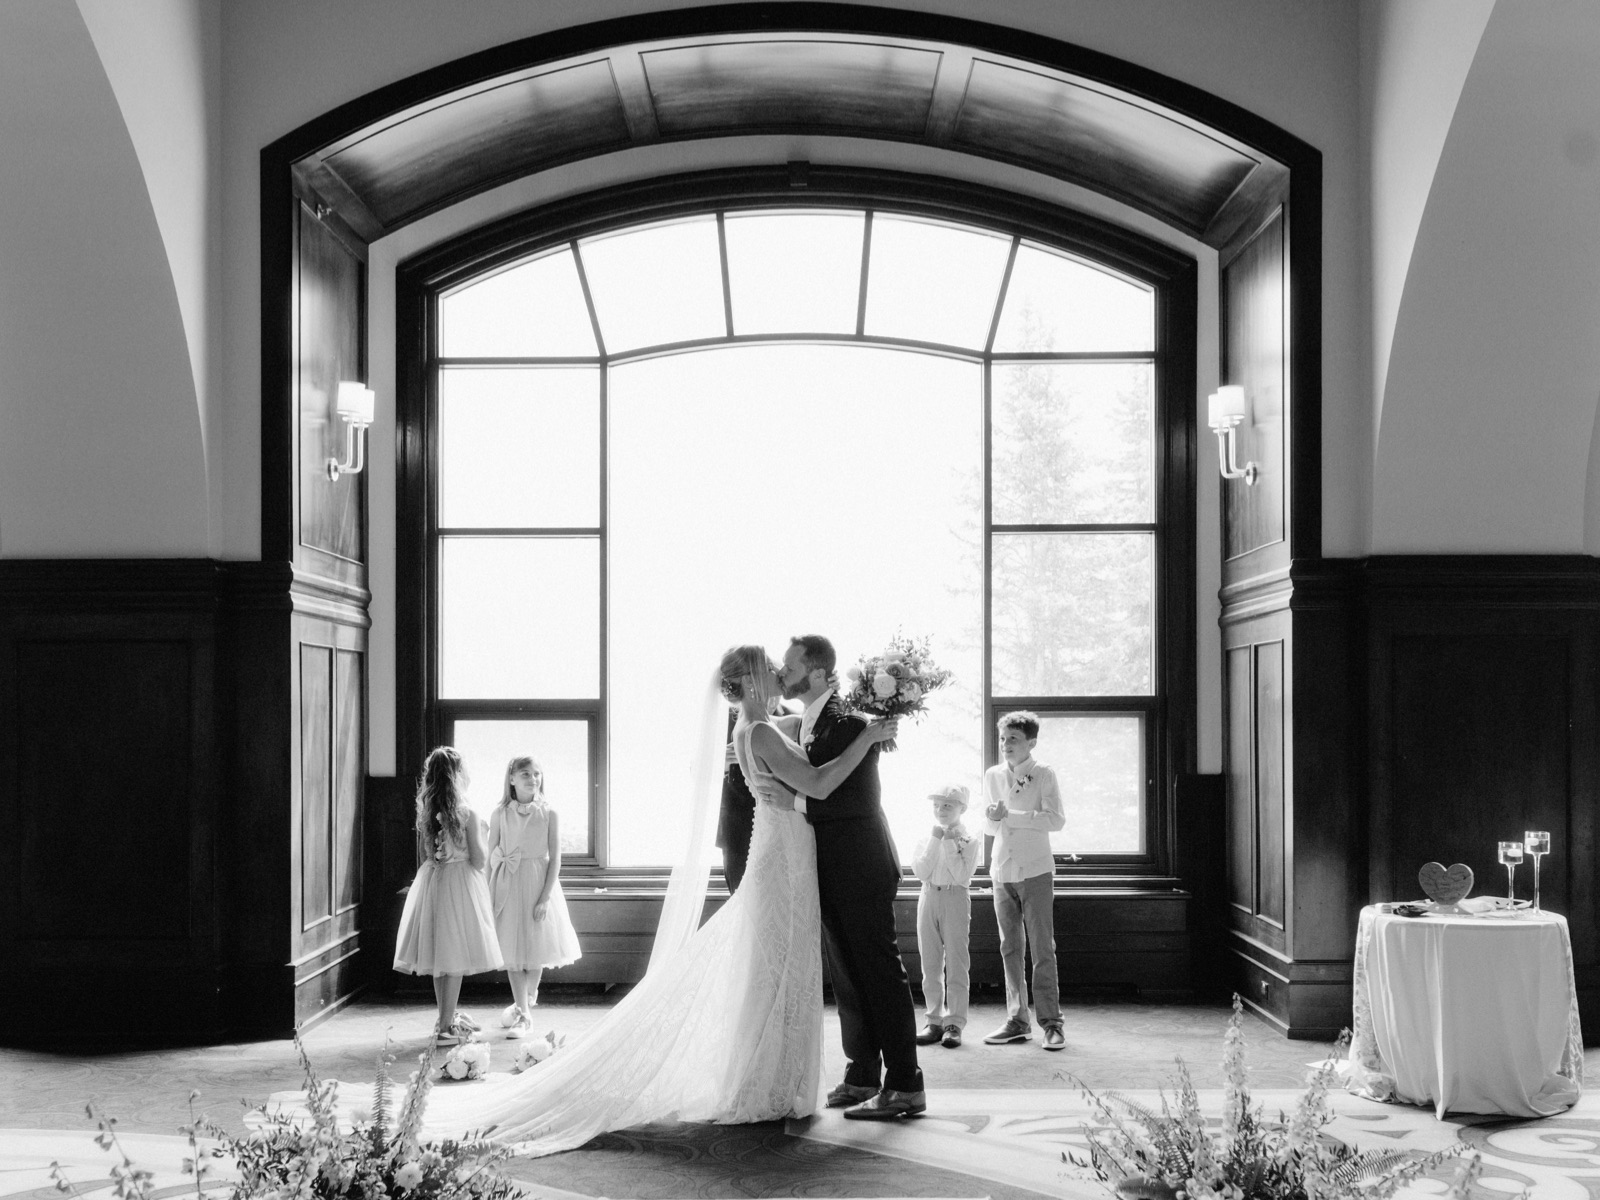 Indoor Victoria Ballroom wedding ceremony with window backdrop at Lake Louise